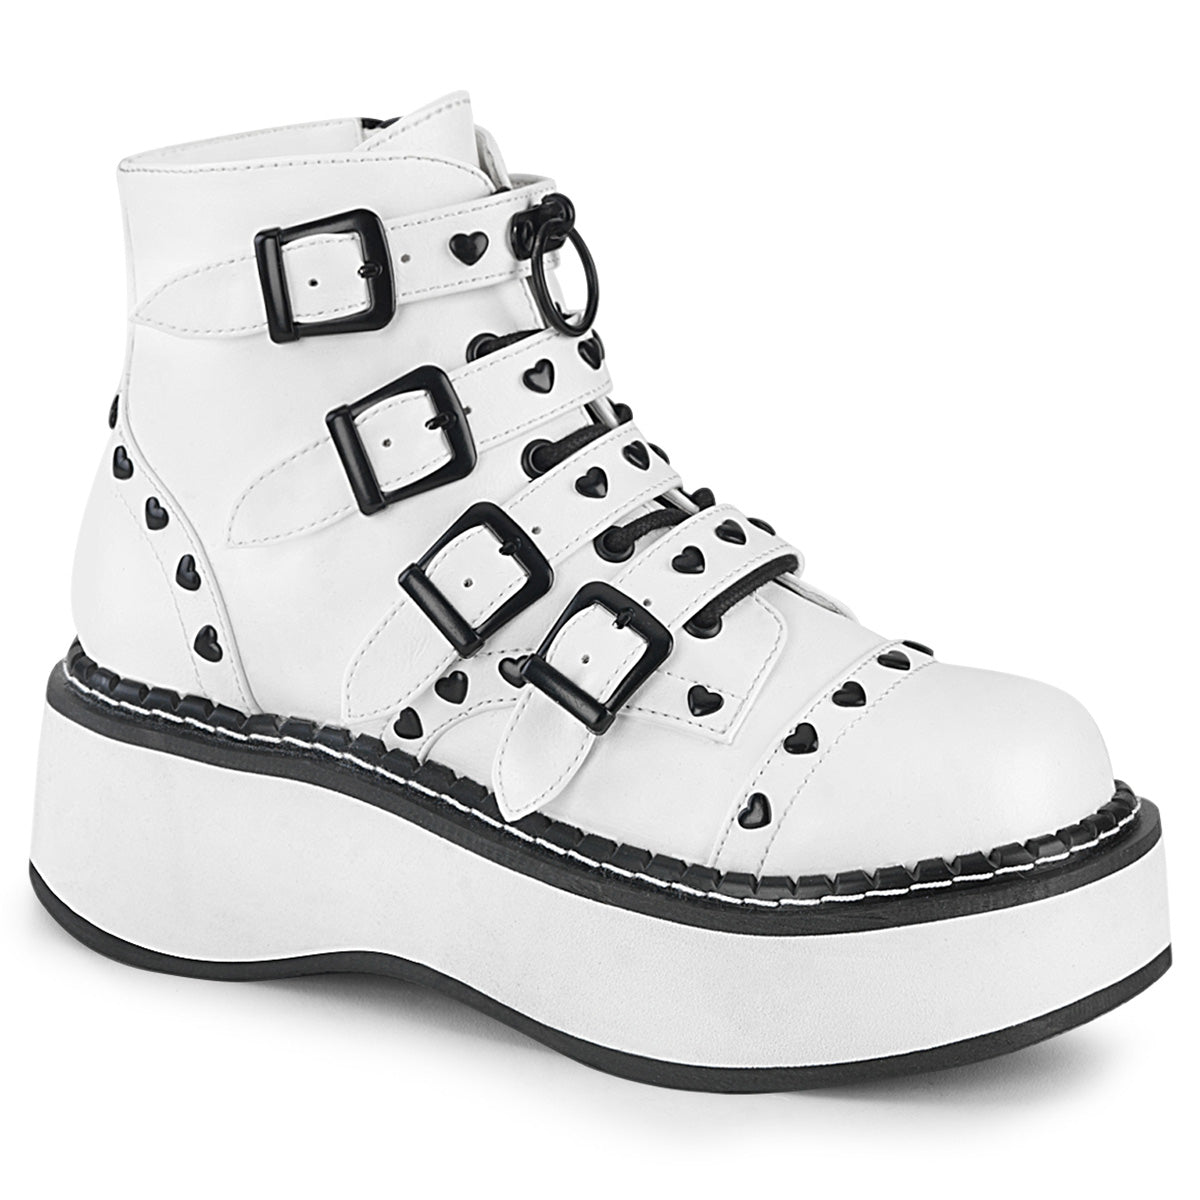 EMILY-315 Alternative Footwear Demonia Women's Ankle Boots White Vegan Leather